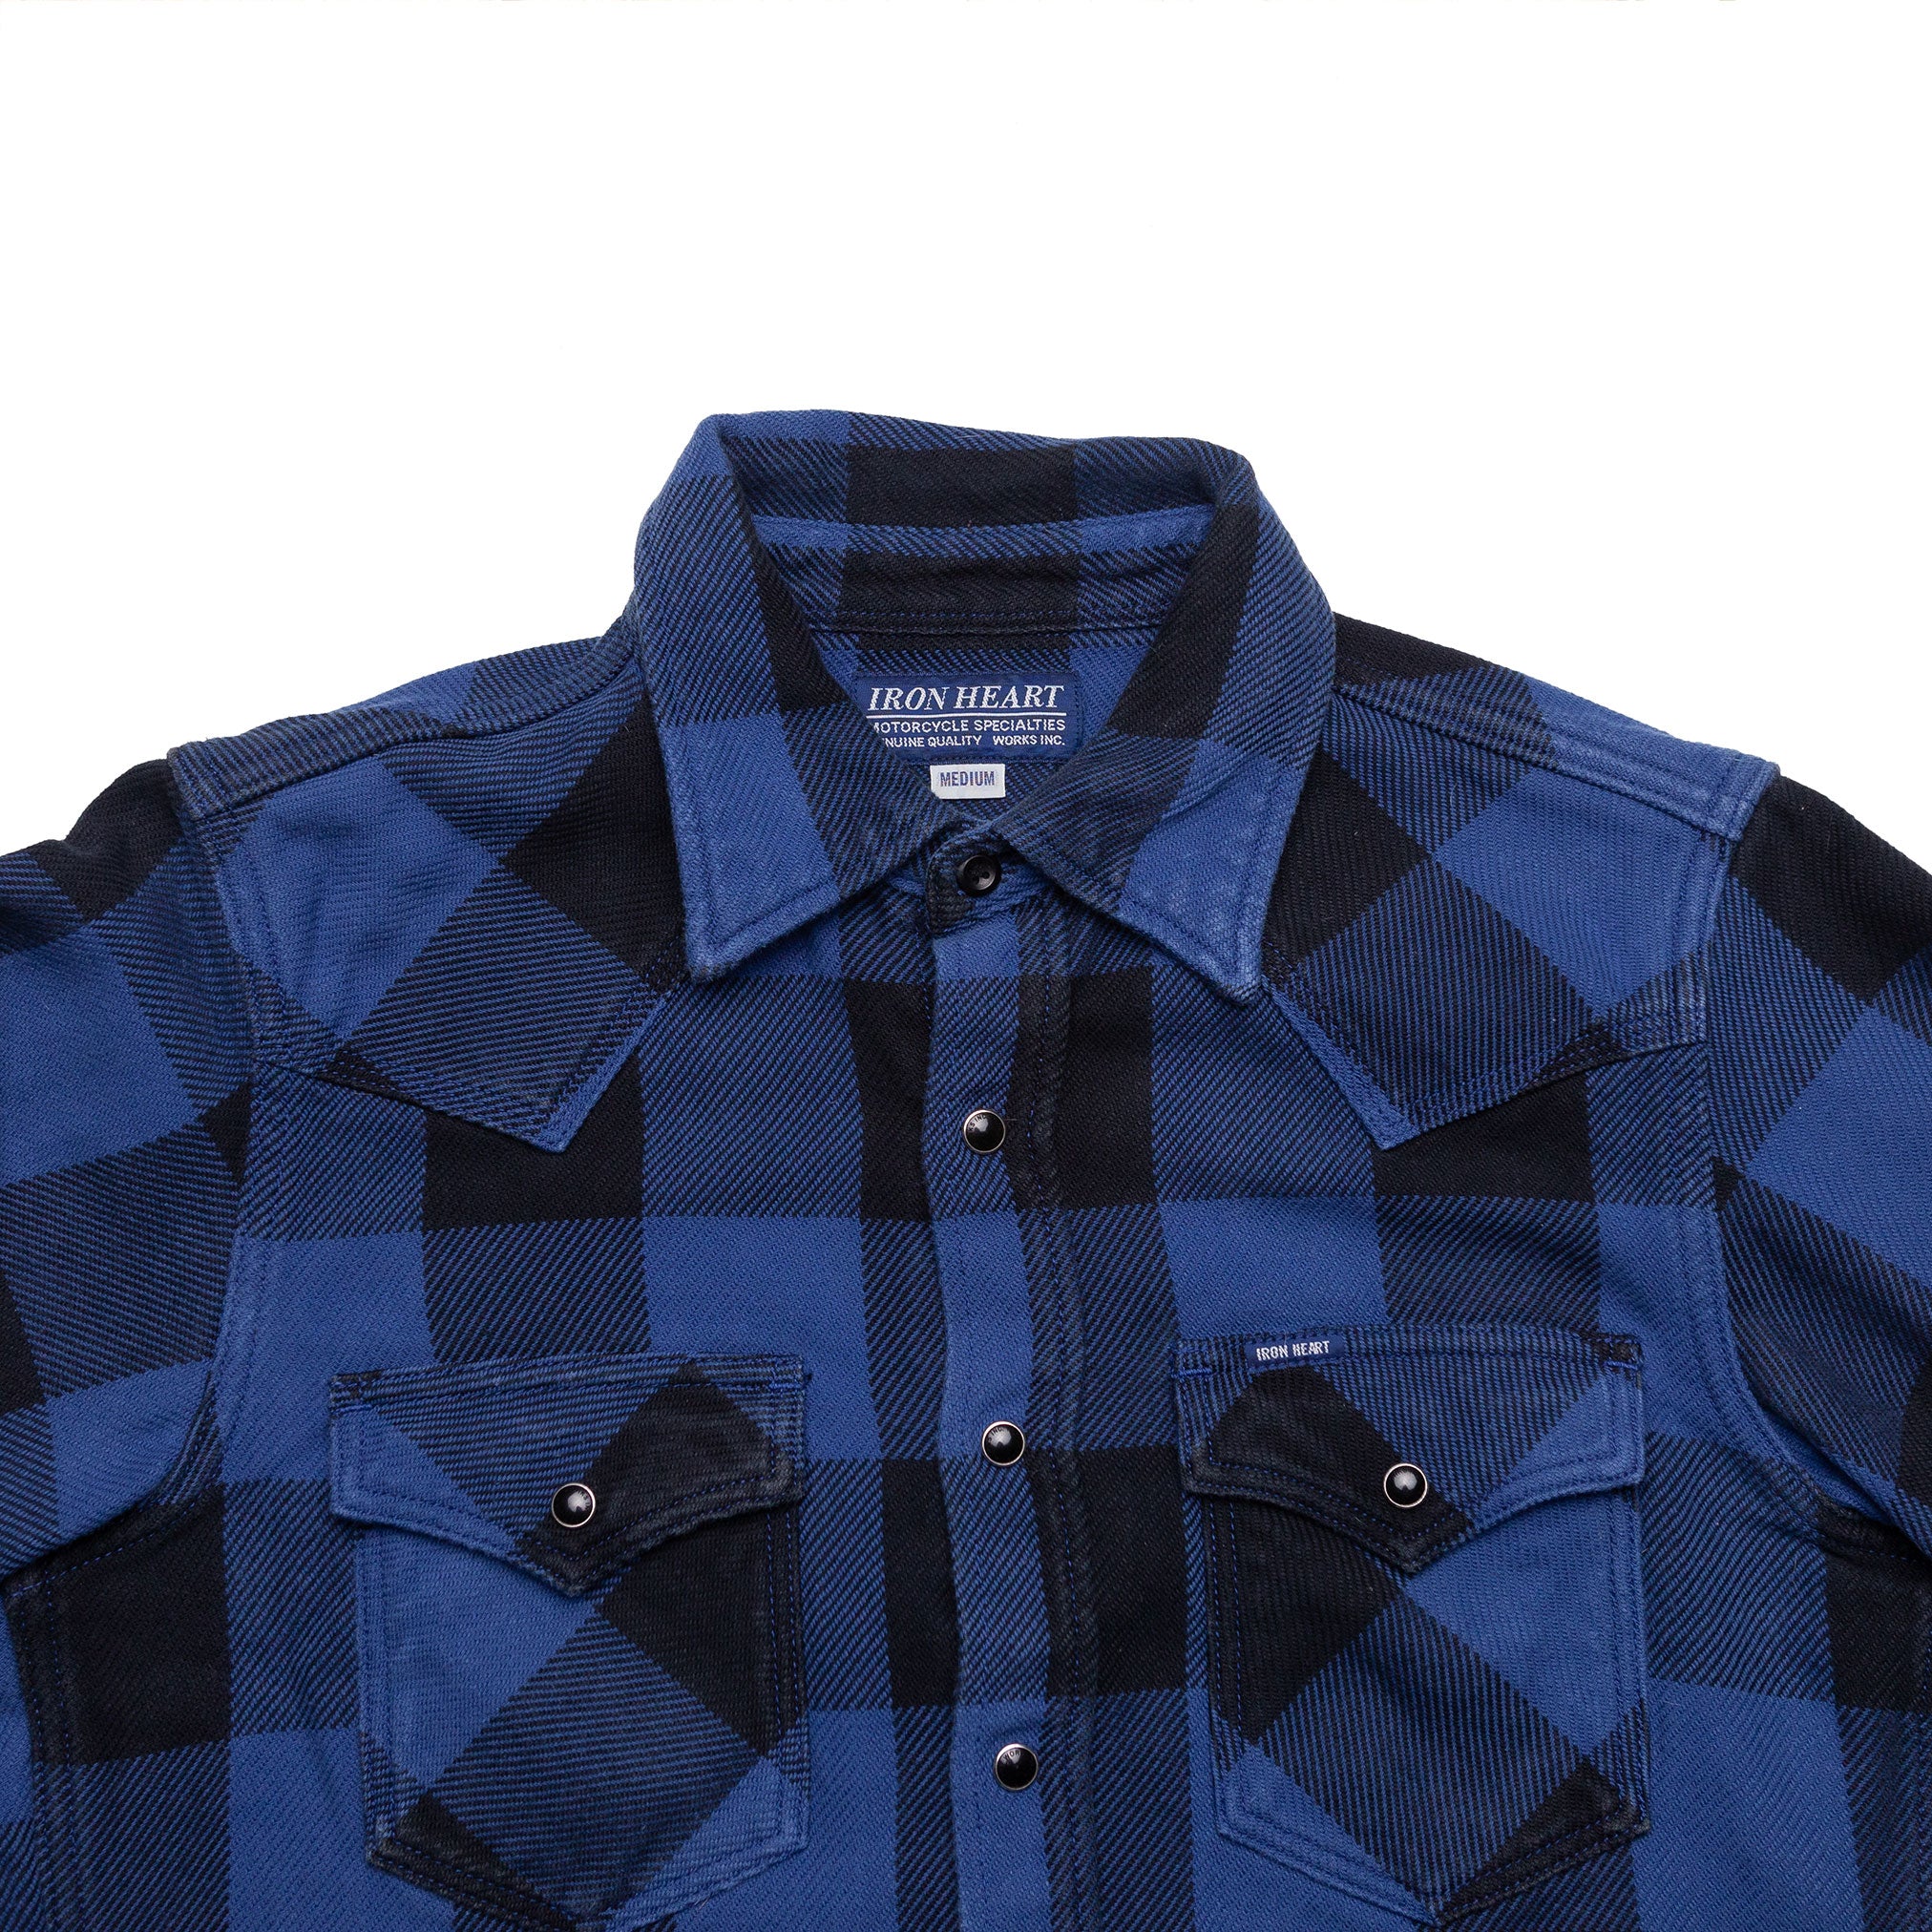 9oz Selvedge Flannel Check Western Shirt - M